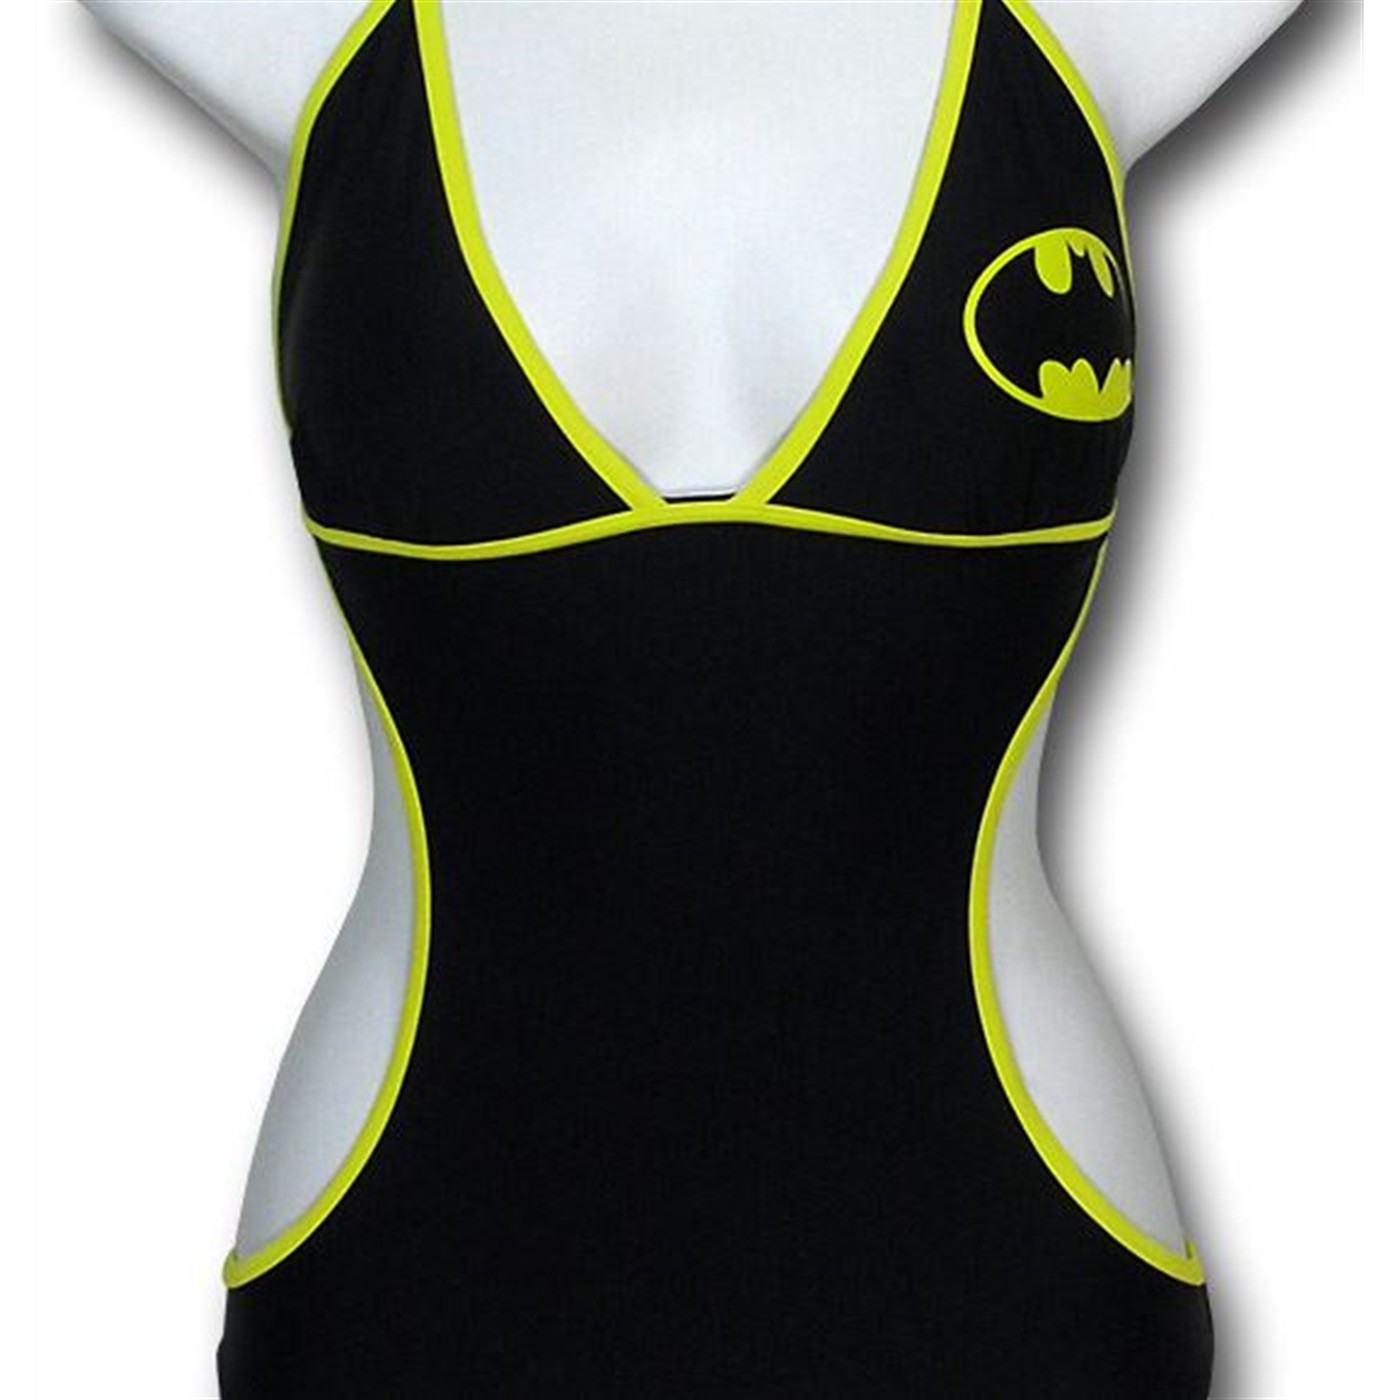 Batman Monokini One-Piece Swimsuit